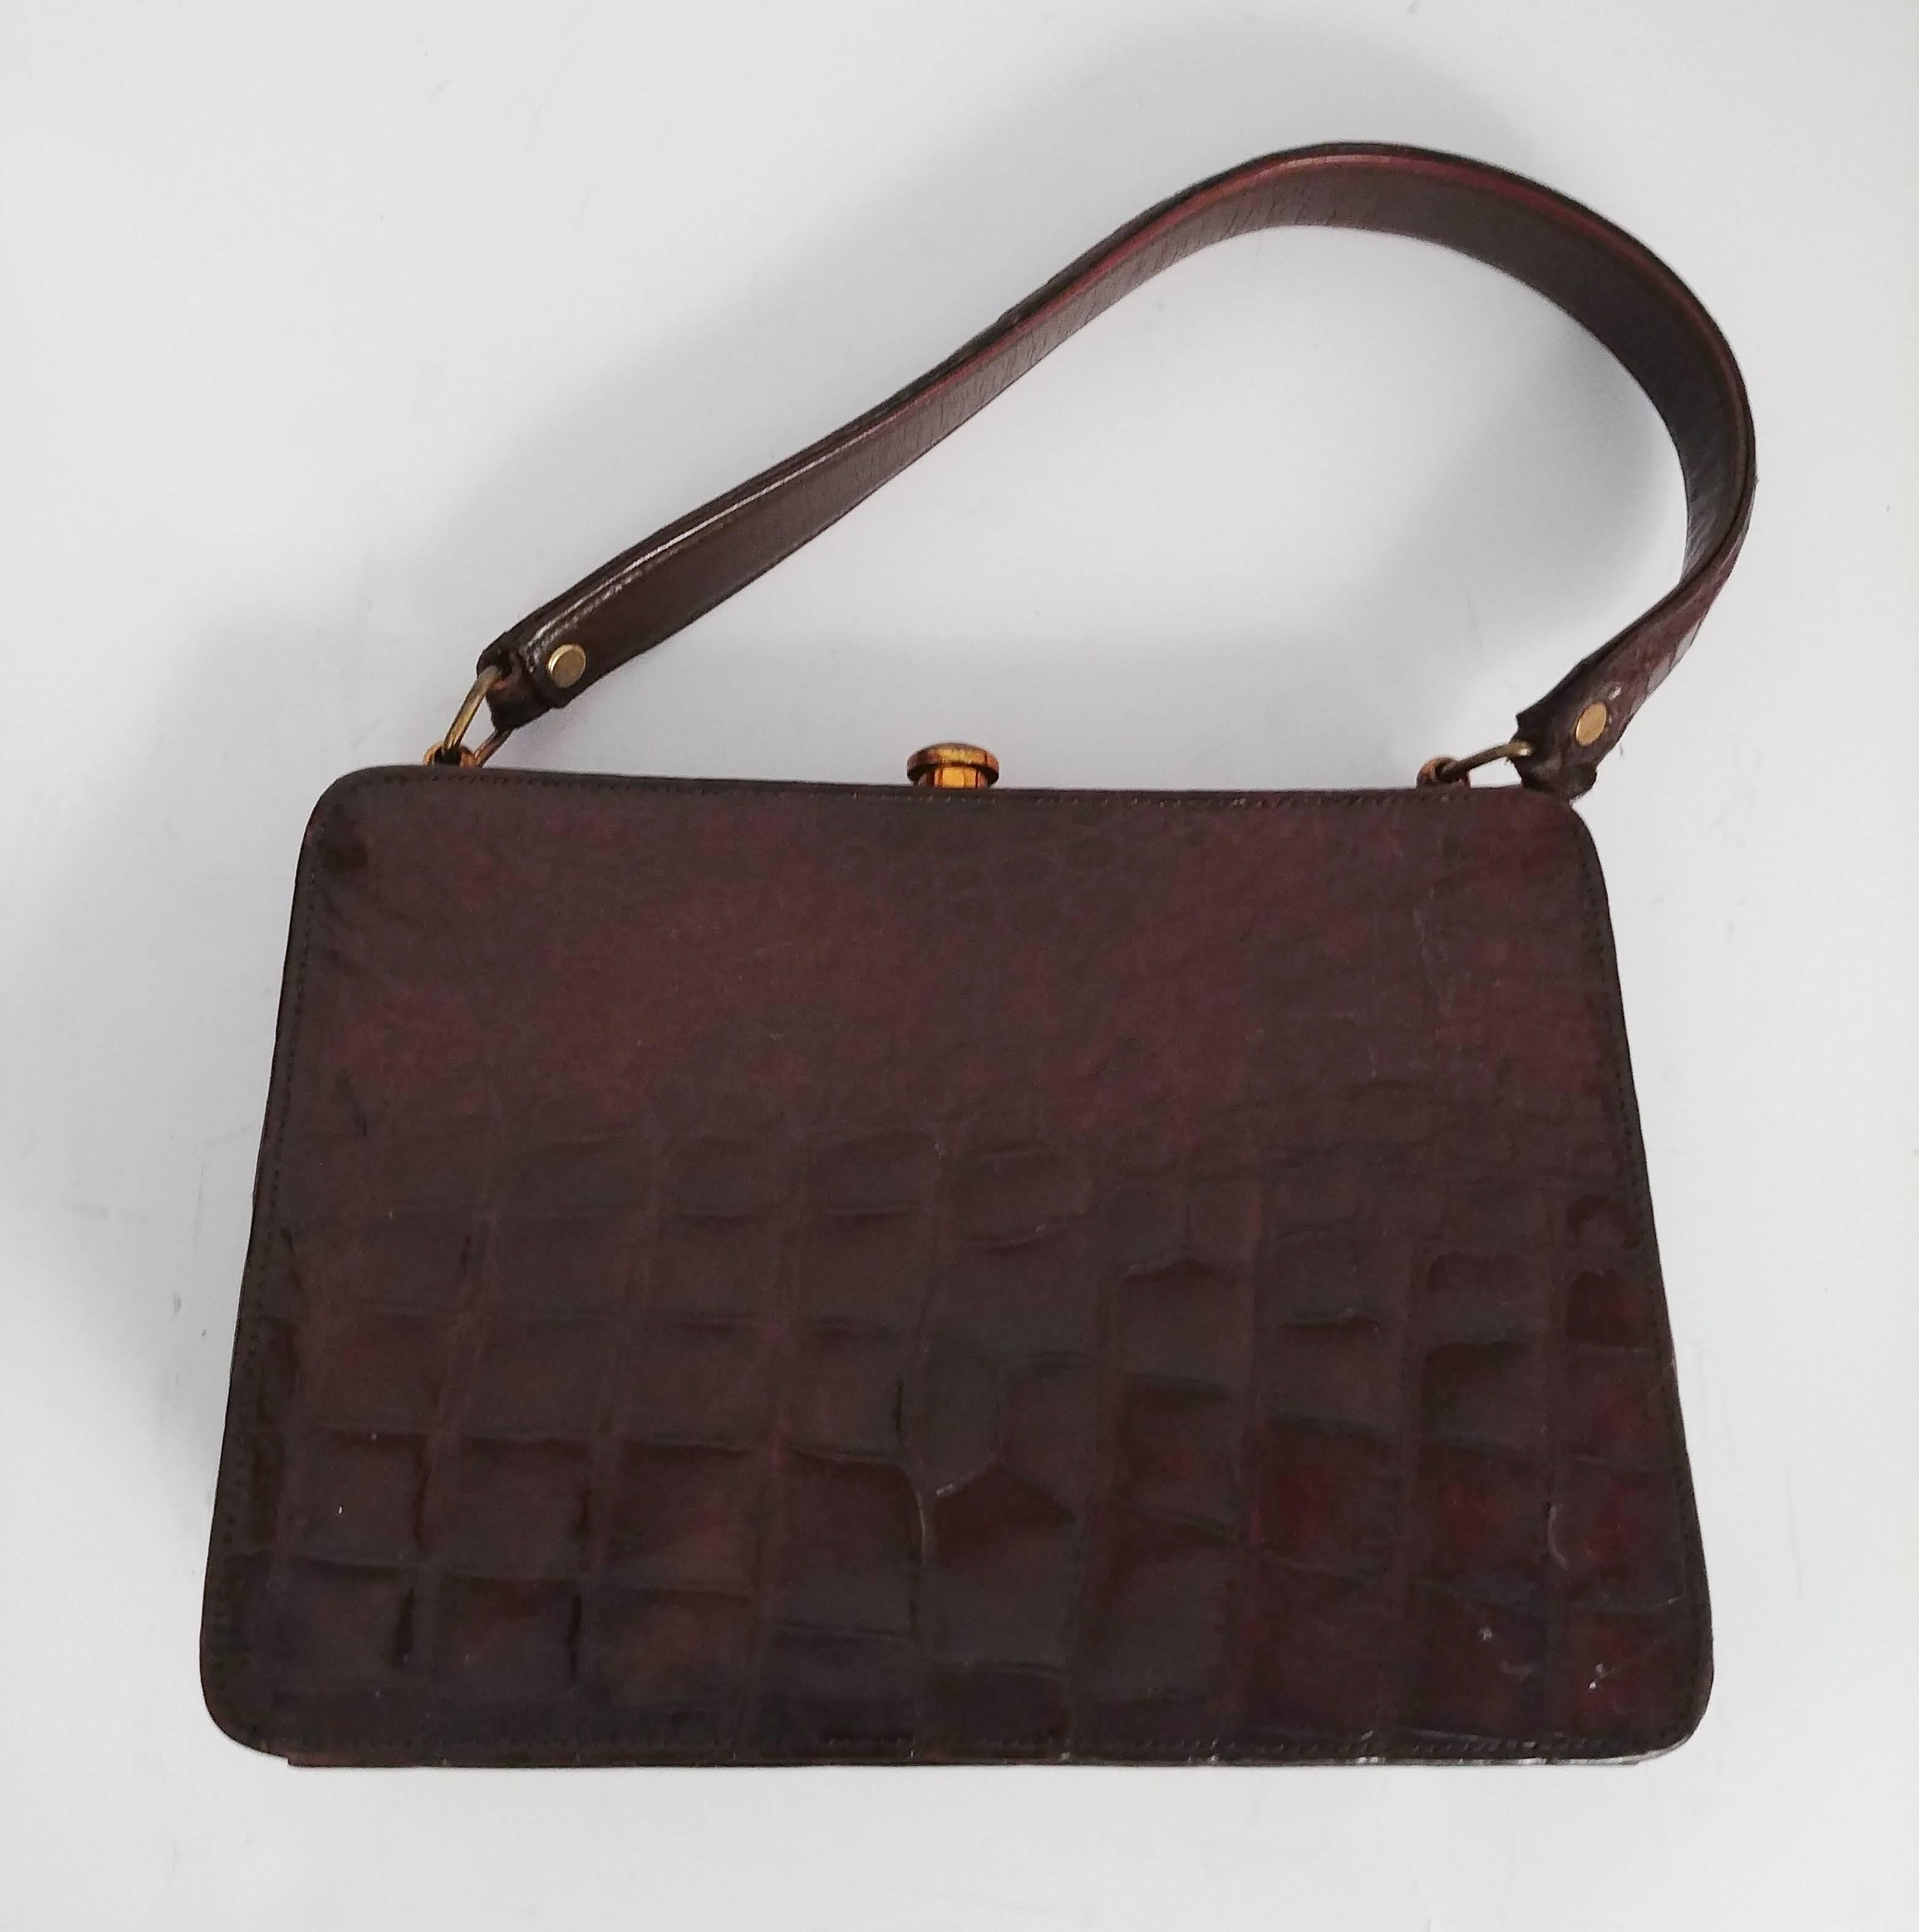 1950s Dark Brown Alligator Purse. Ridged front of purse. Cognac leather interior. 